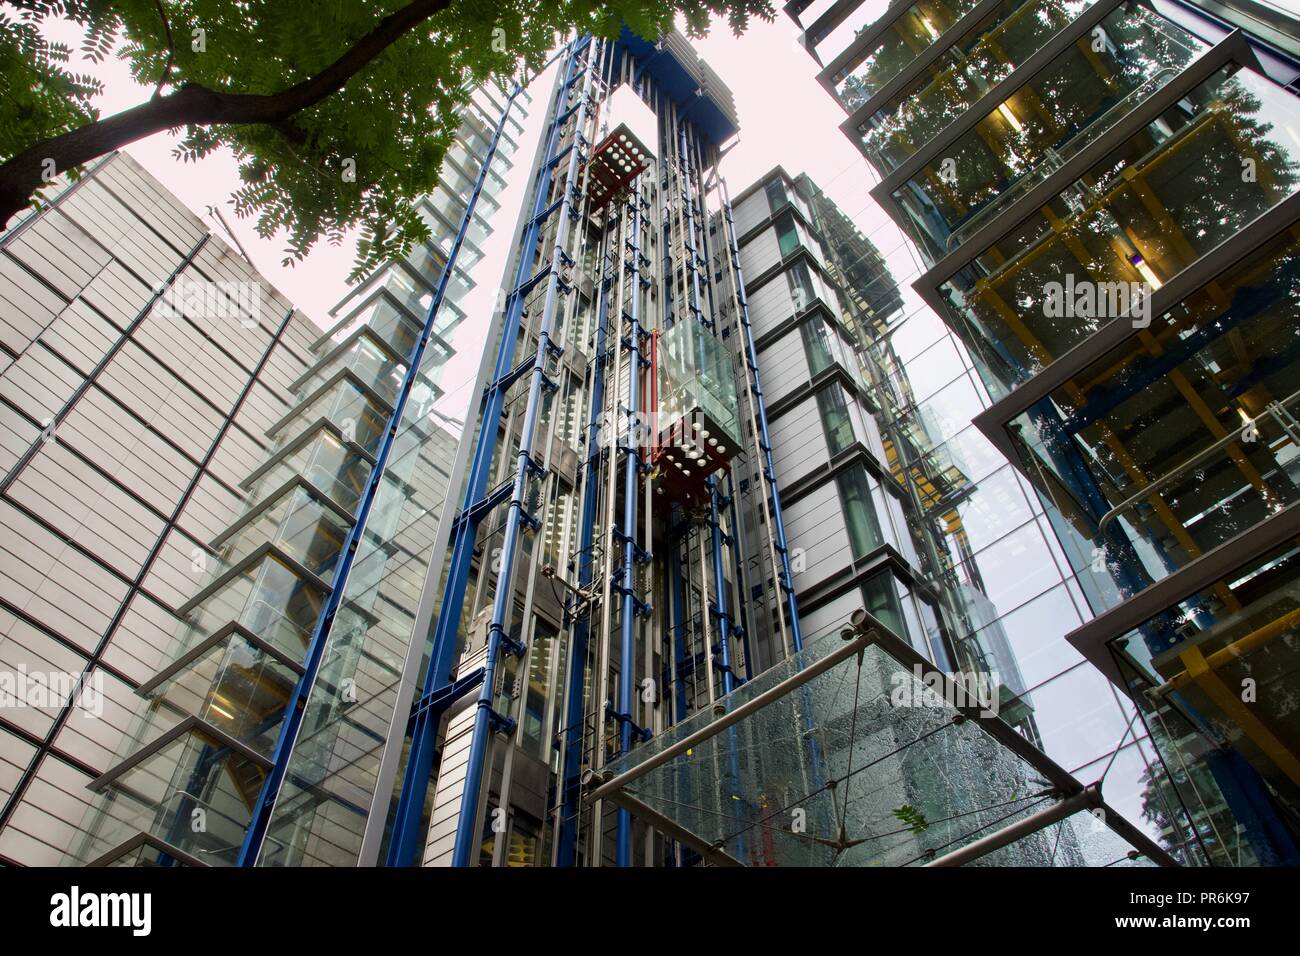 Lloyd's Register - Richard Rogers building features external glass wall climbing lifts, on 71 Fenchurch Street, London Stock Photo